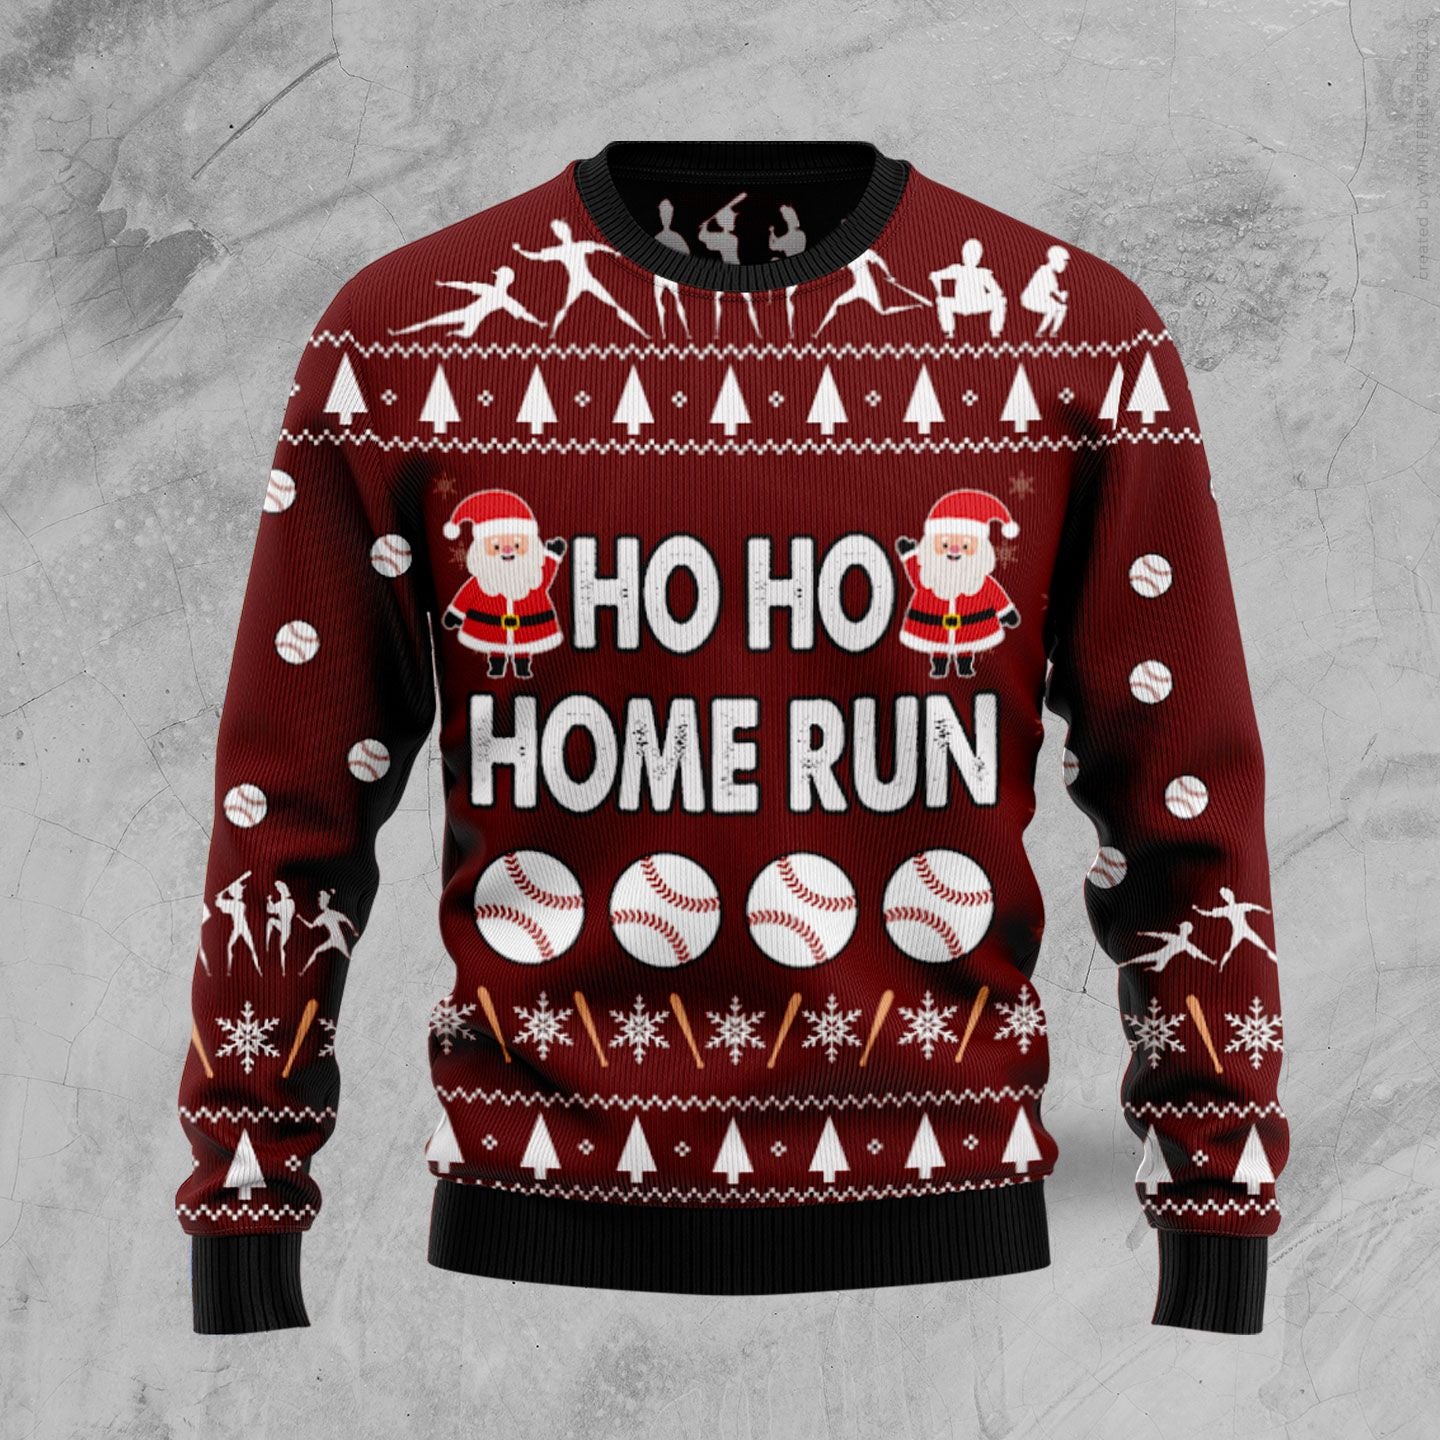 Baseball Hoho Home Run TY309 Ugly Christmas Sweater